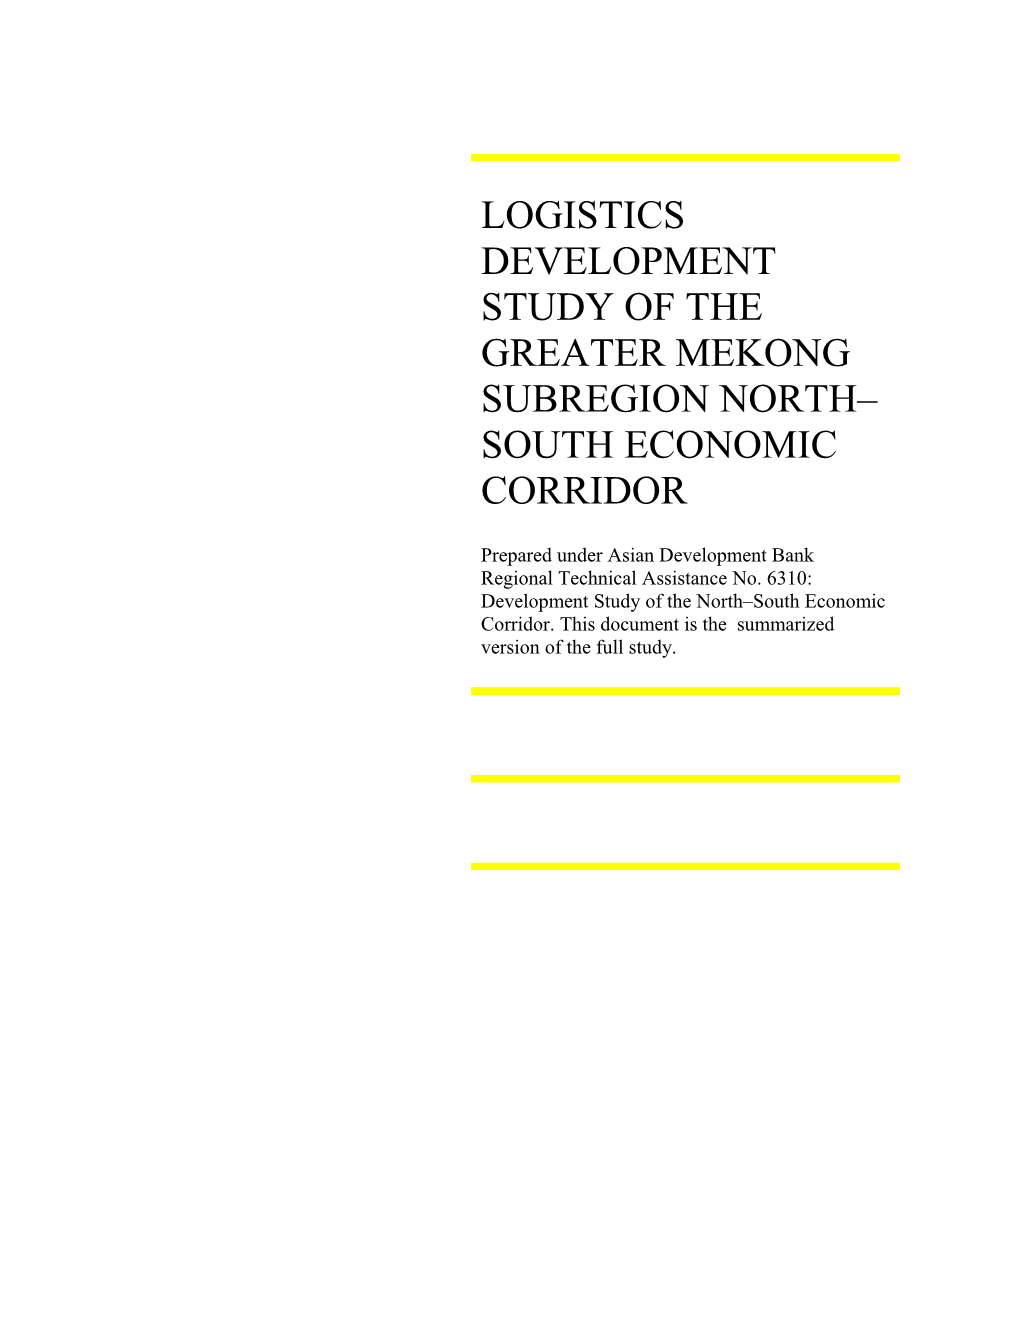 Logistics Development Study of the North South Economic Corridor